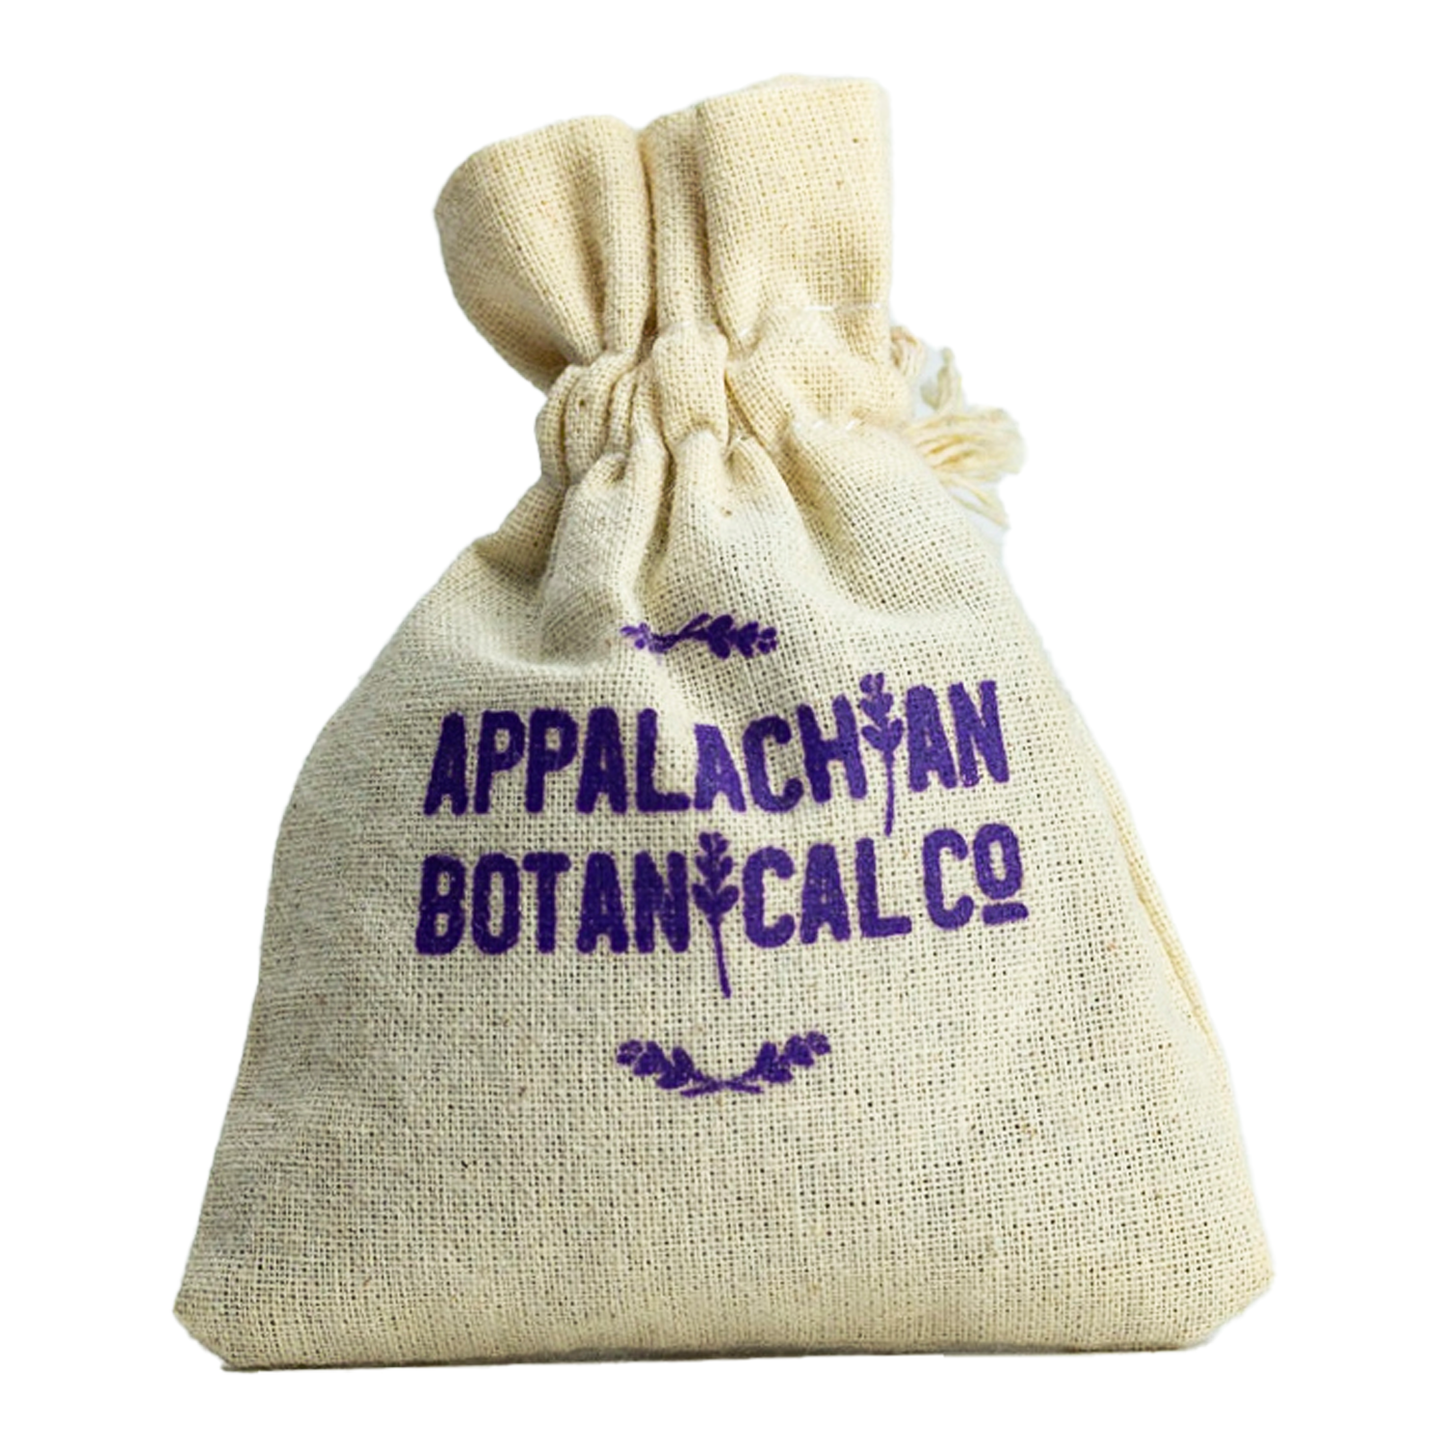    Appalachian Botanical Co. Lovely Lavender Gift Set